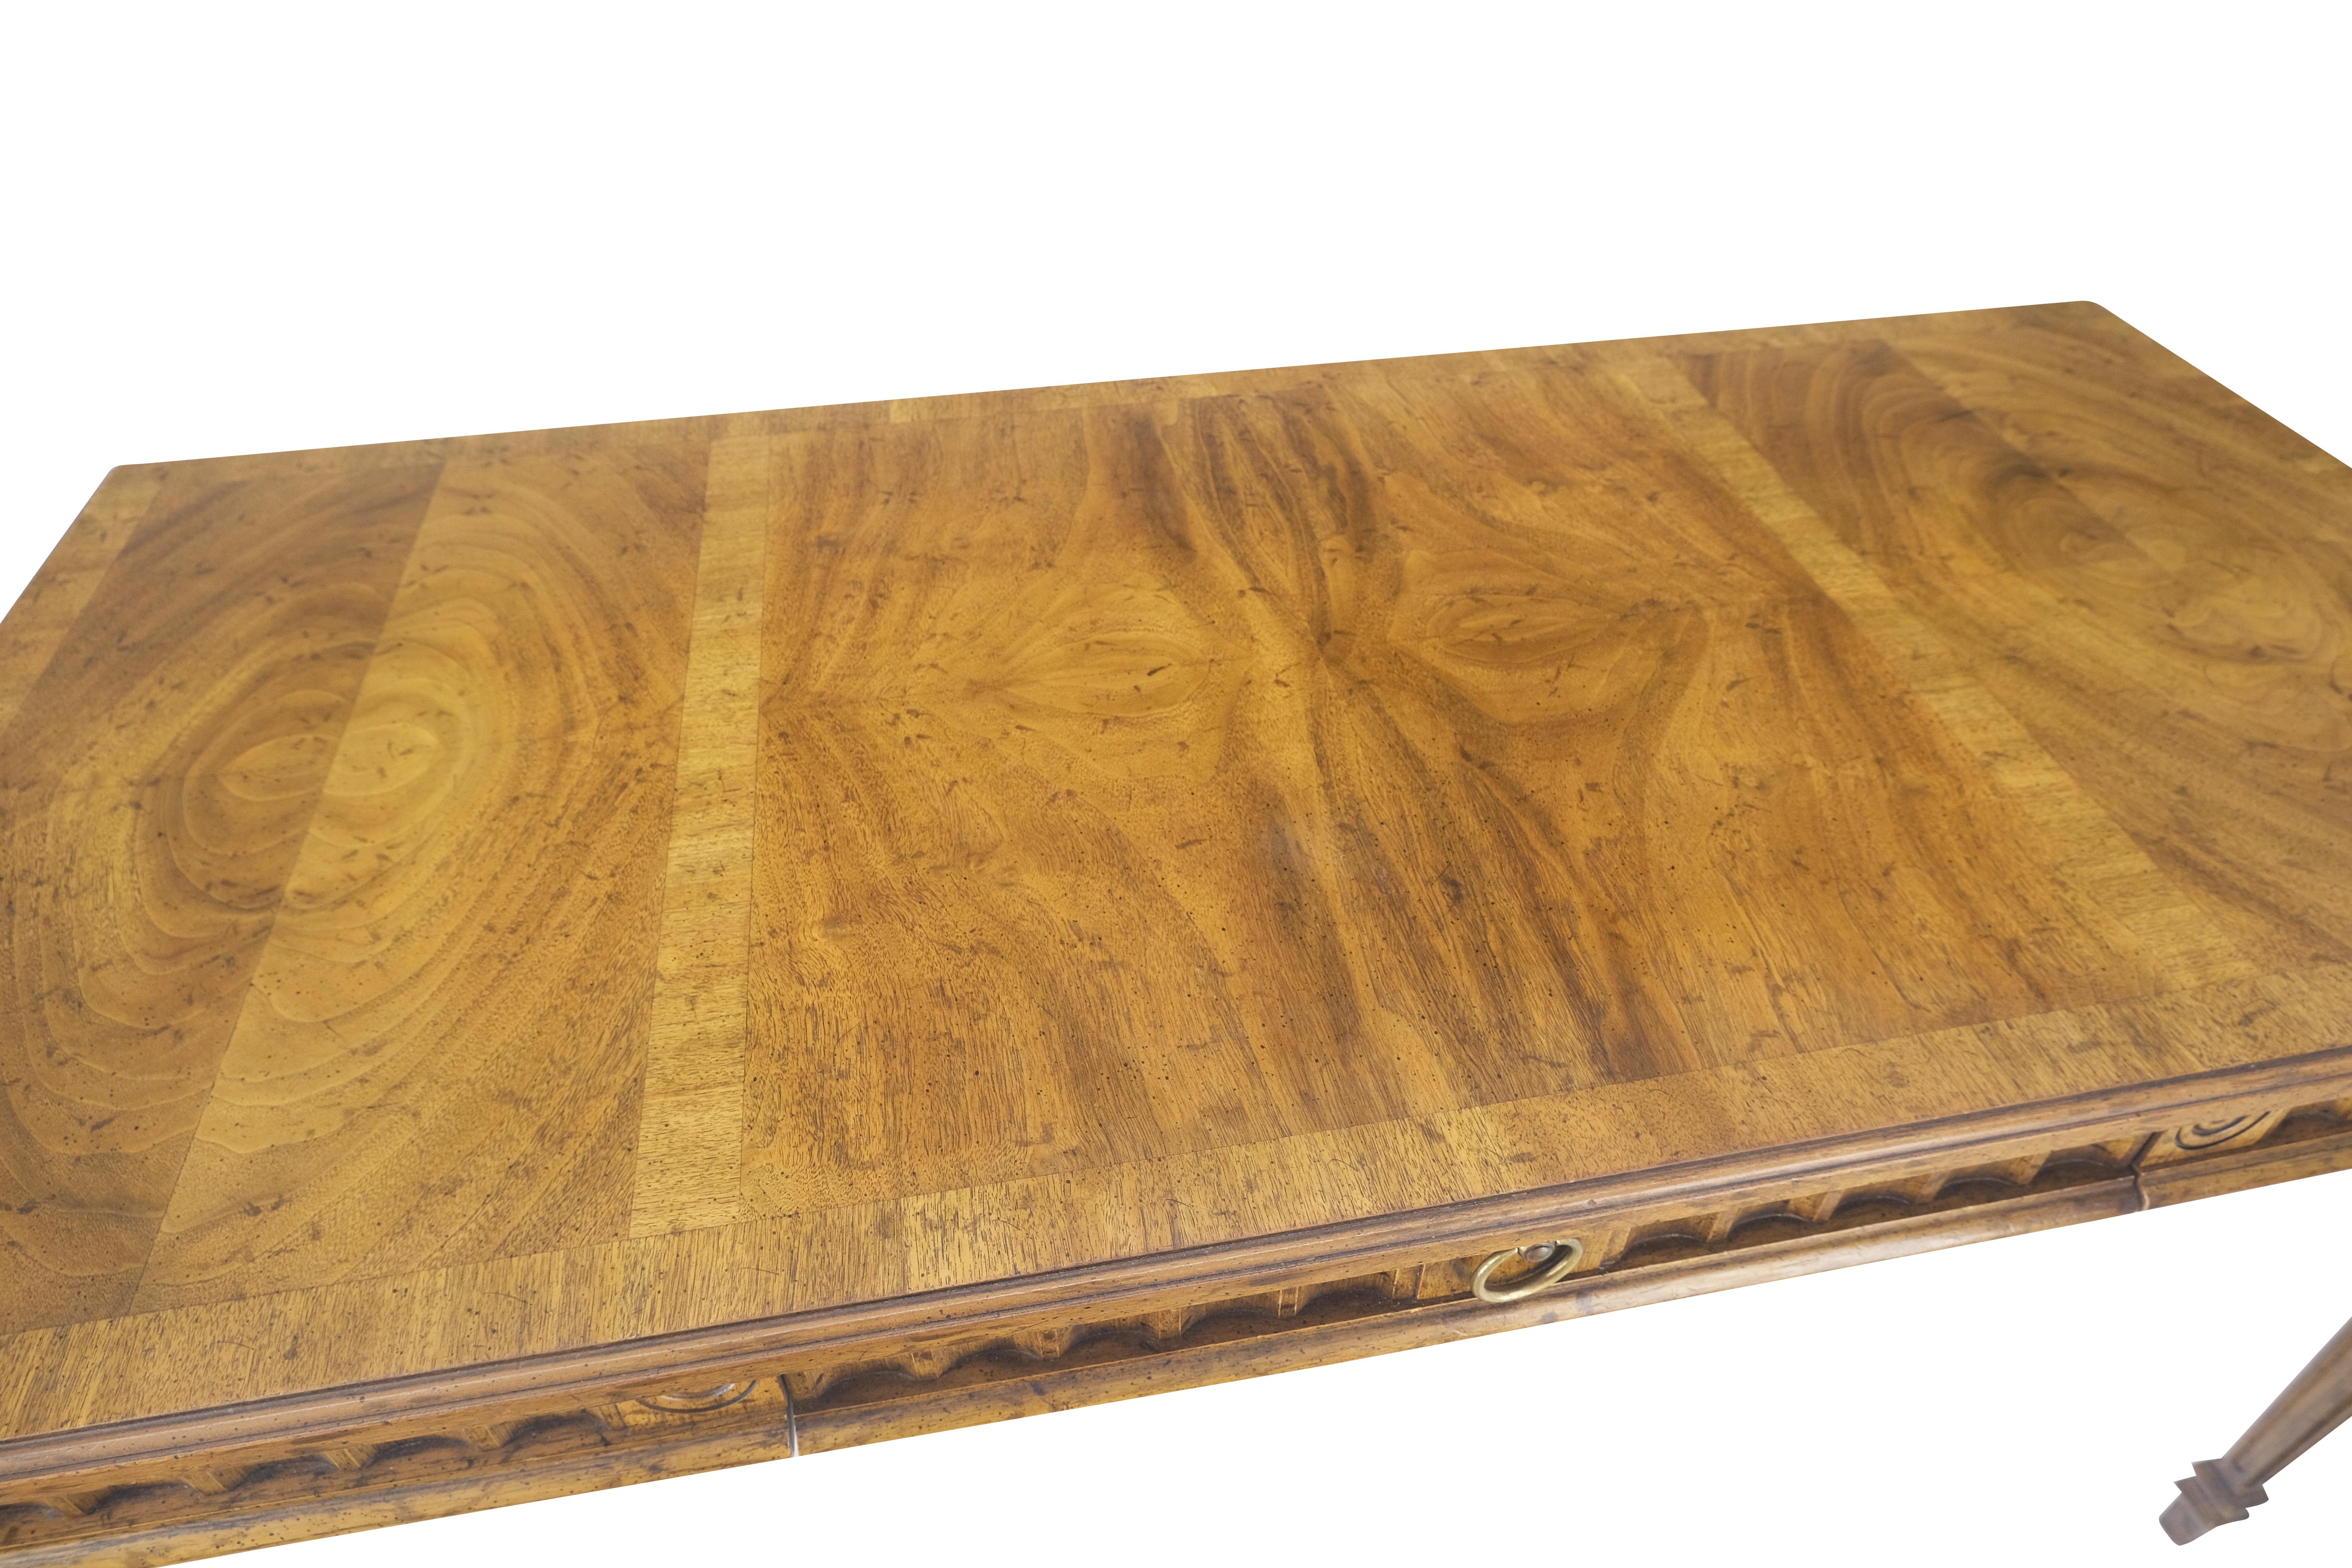 Decorative Banded Heritage Henredon Scalloped Edge Olive Burl Wood Top Desk One Drawer Table MINT!